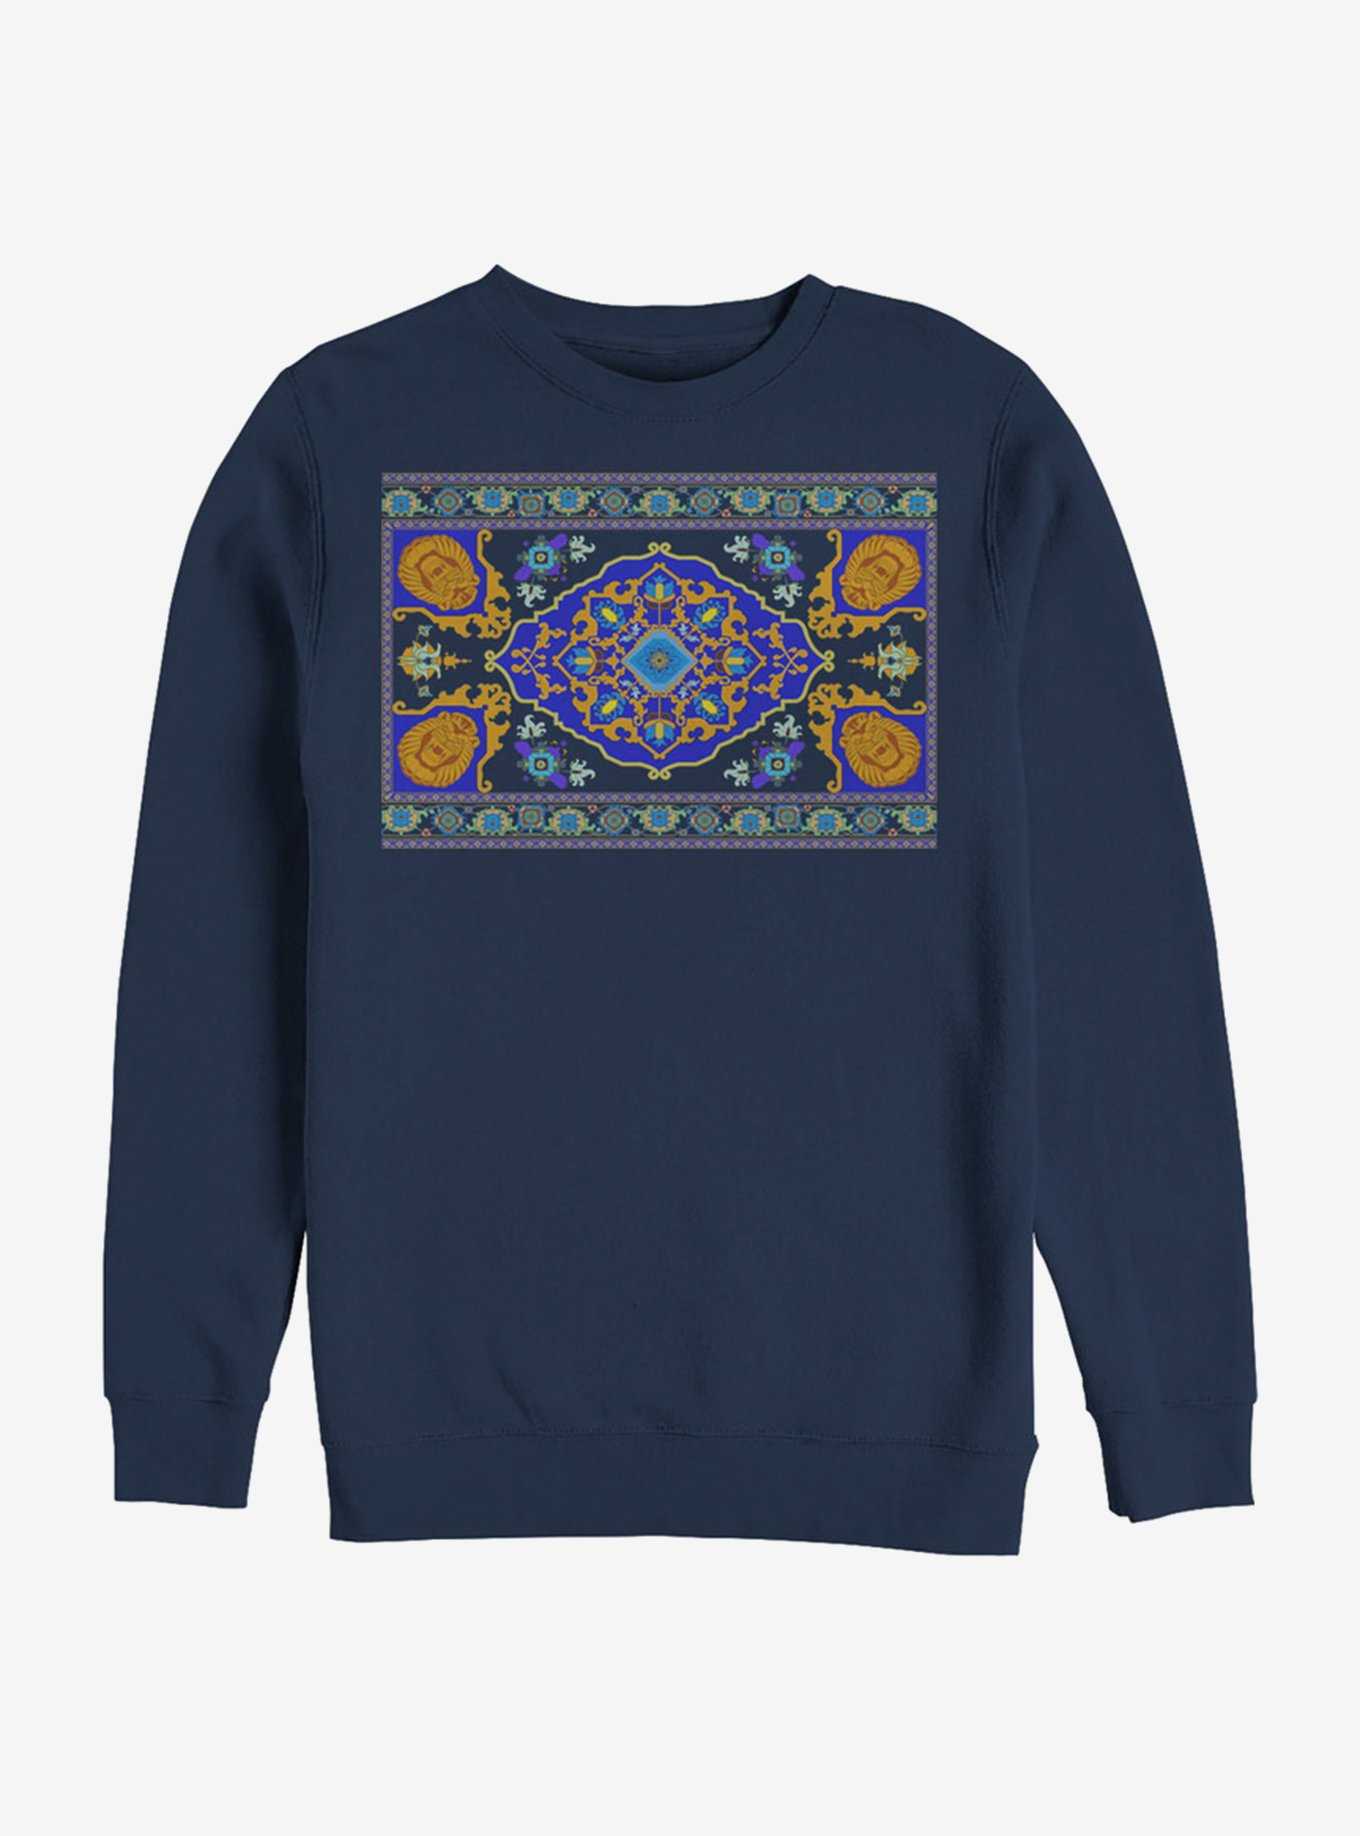 Disney Aladdin 2019 Magic Carpet Panel Print Sweatshirt, , hi-res